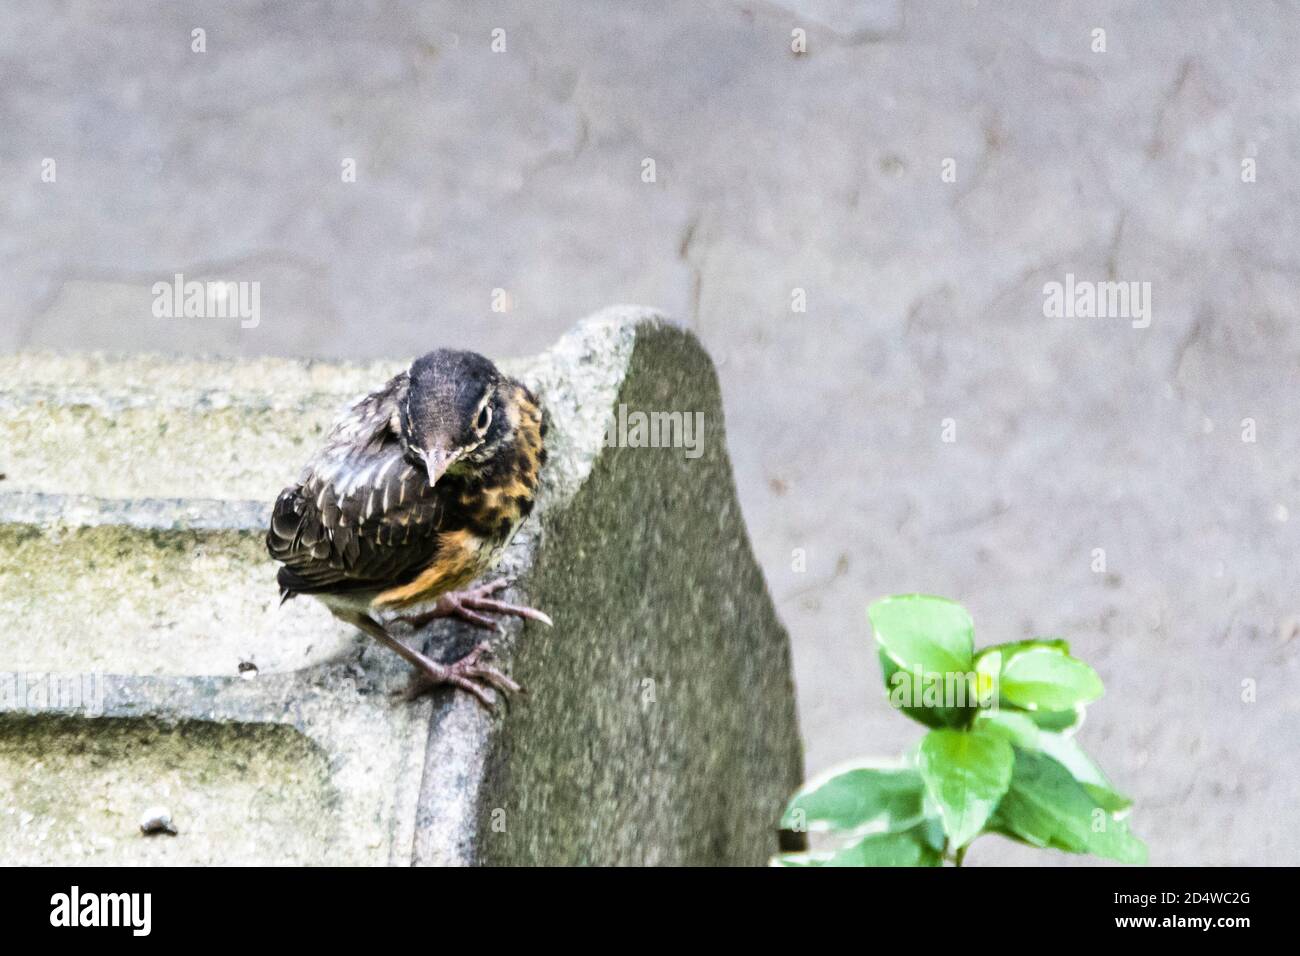 Cute little American Robin Fledgling, Turdus migratorius, in a Greenwich Village courtyard, New York City, NY, USA Stock Photo